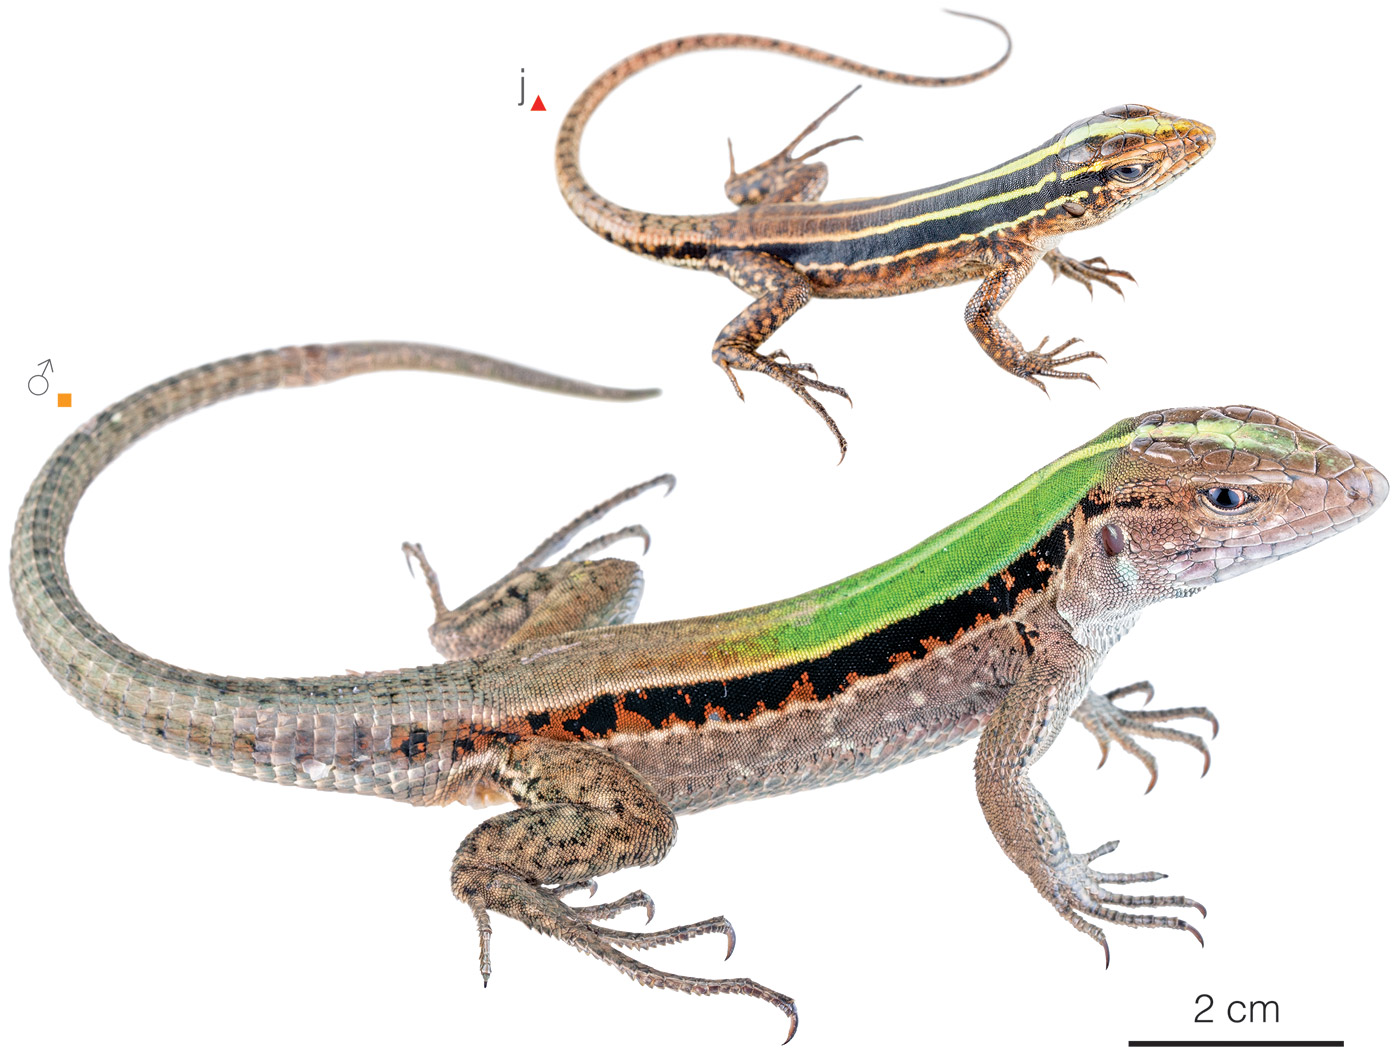 Figure showing variation among individuals of Kentropyx altamazonica